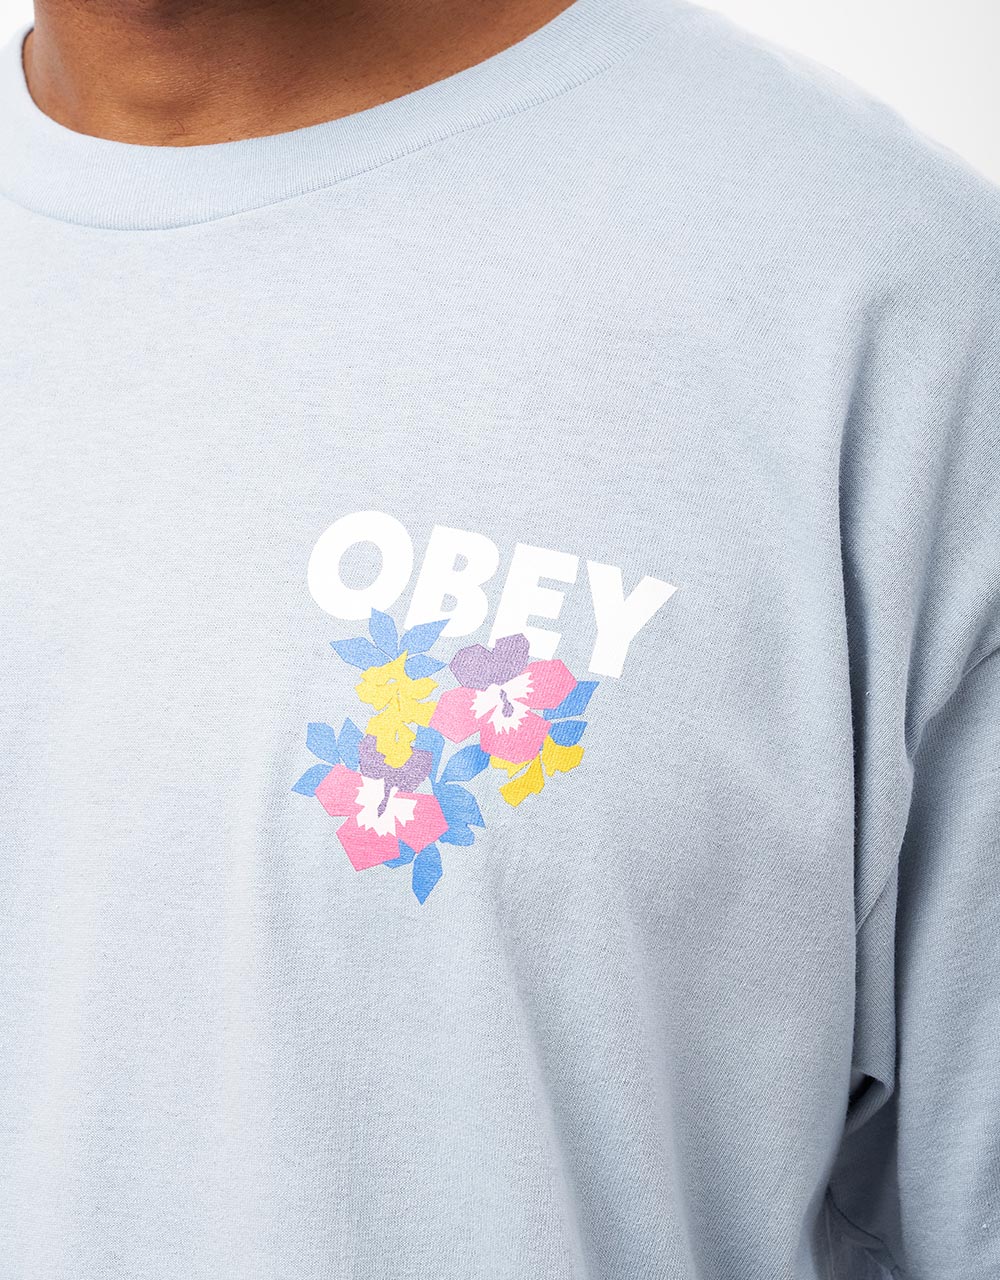 Obey Floral Garden T-Shirt - Good Grey